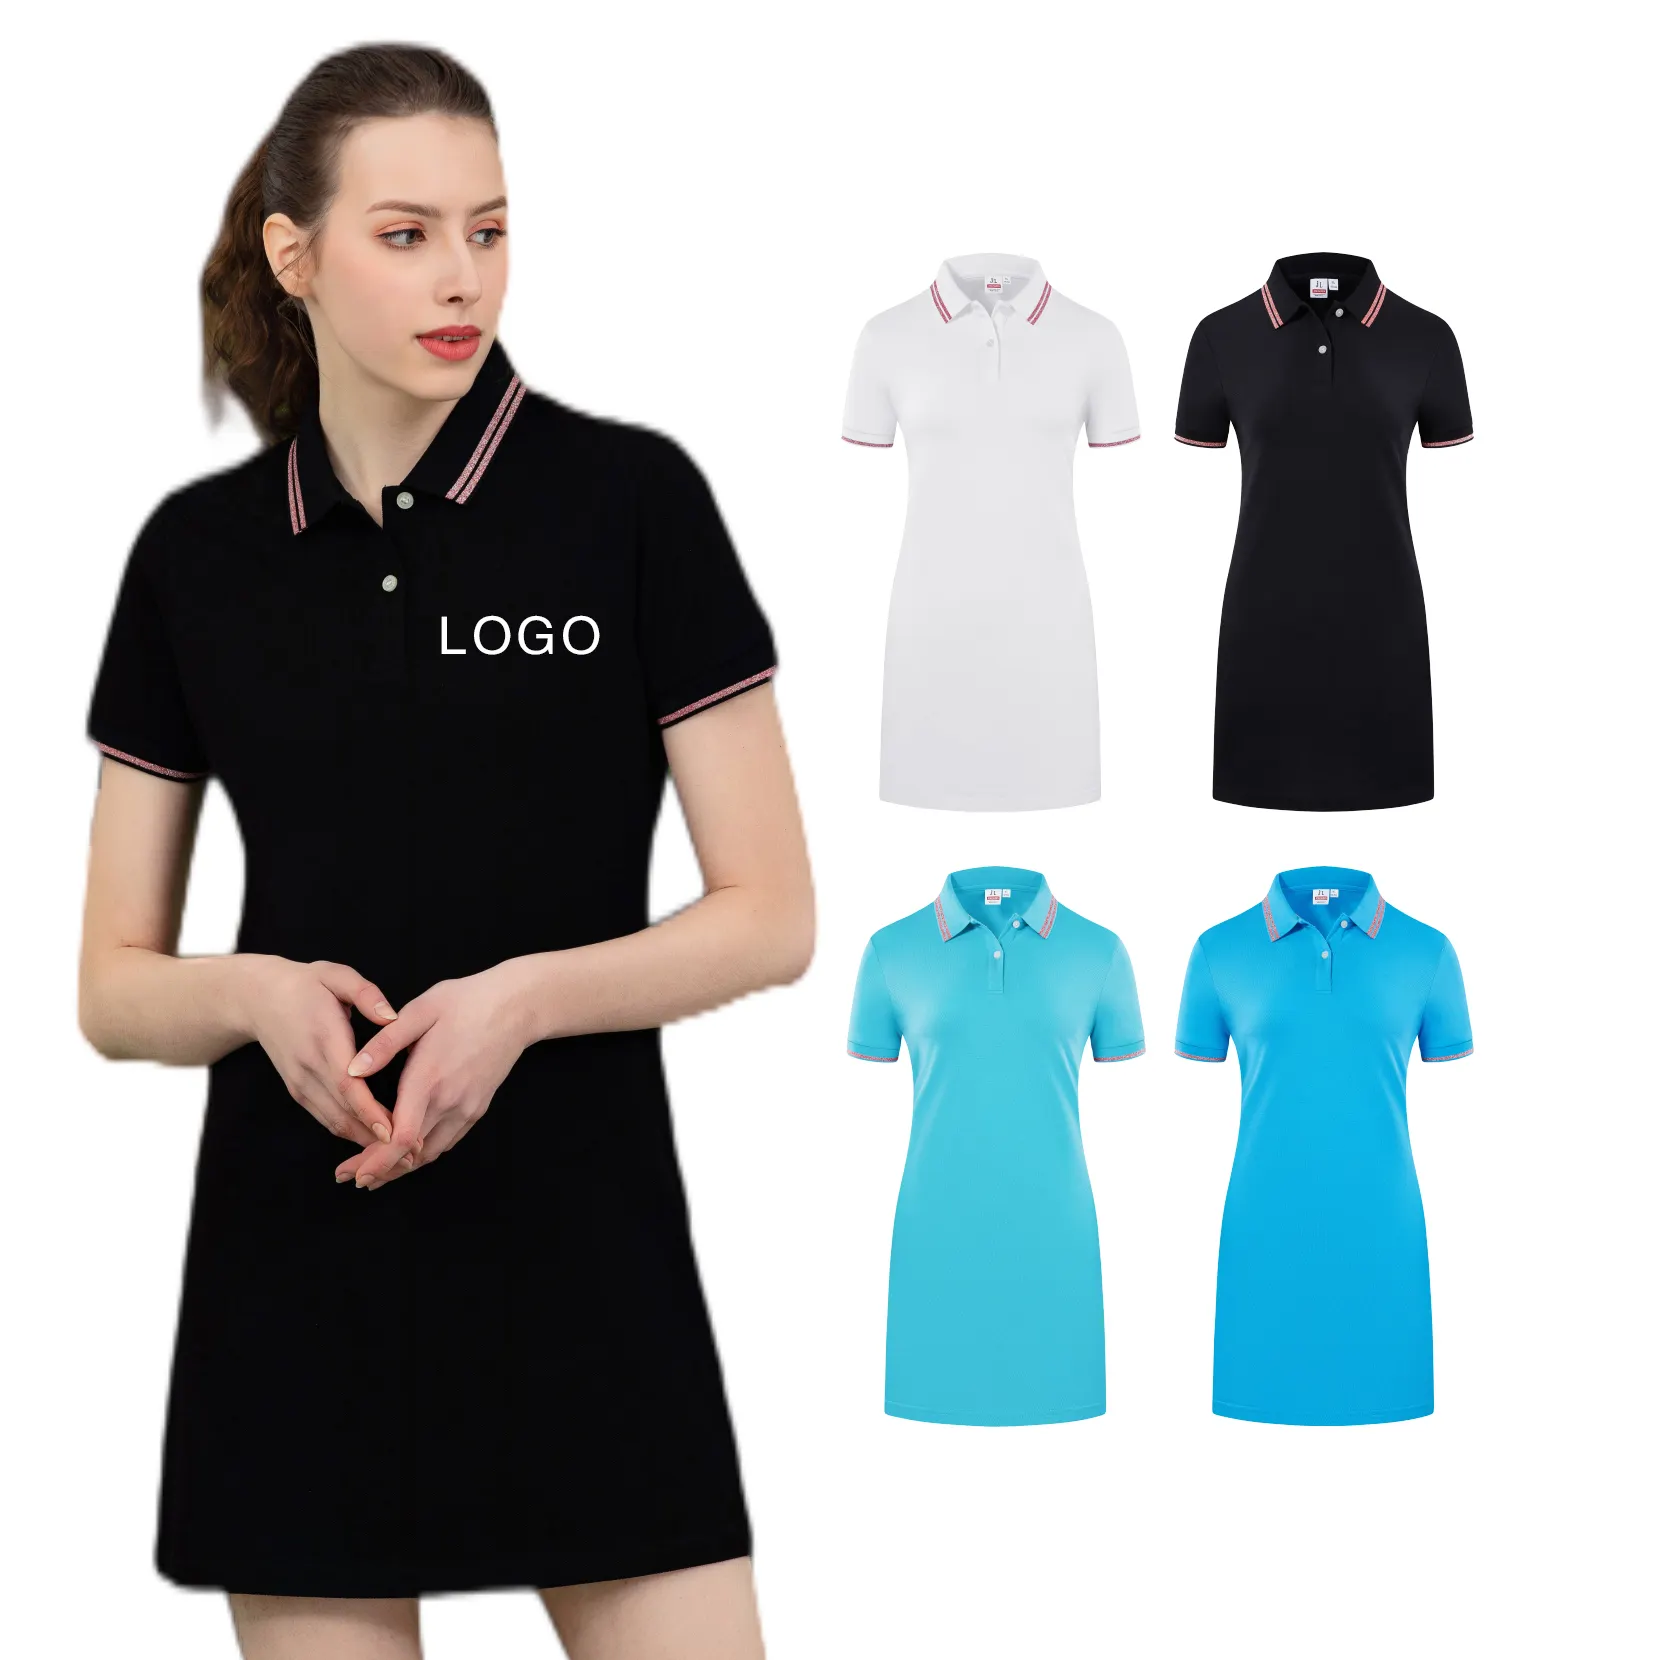 2022 new design custom branded logo printing summer golf polo shirts cotton ladies girls sport casual dresses women dress